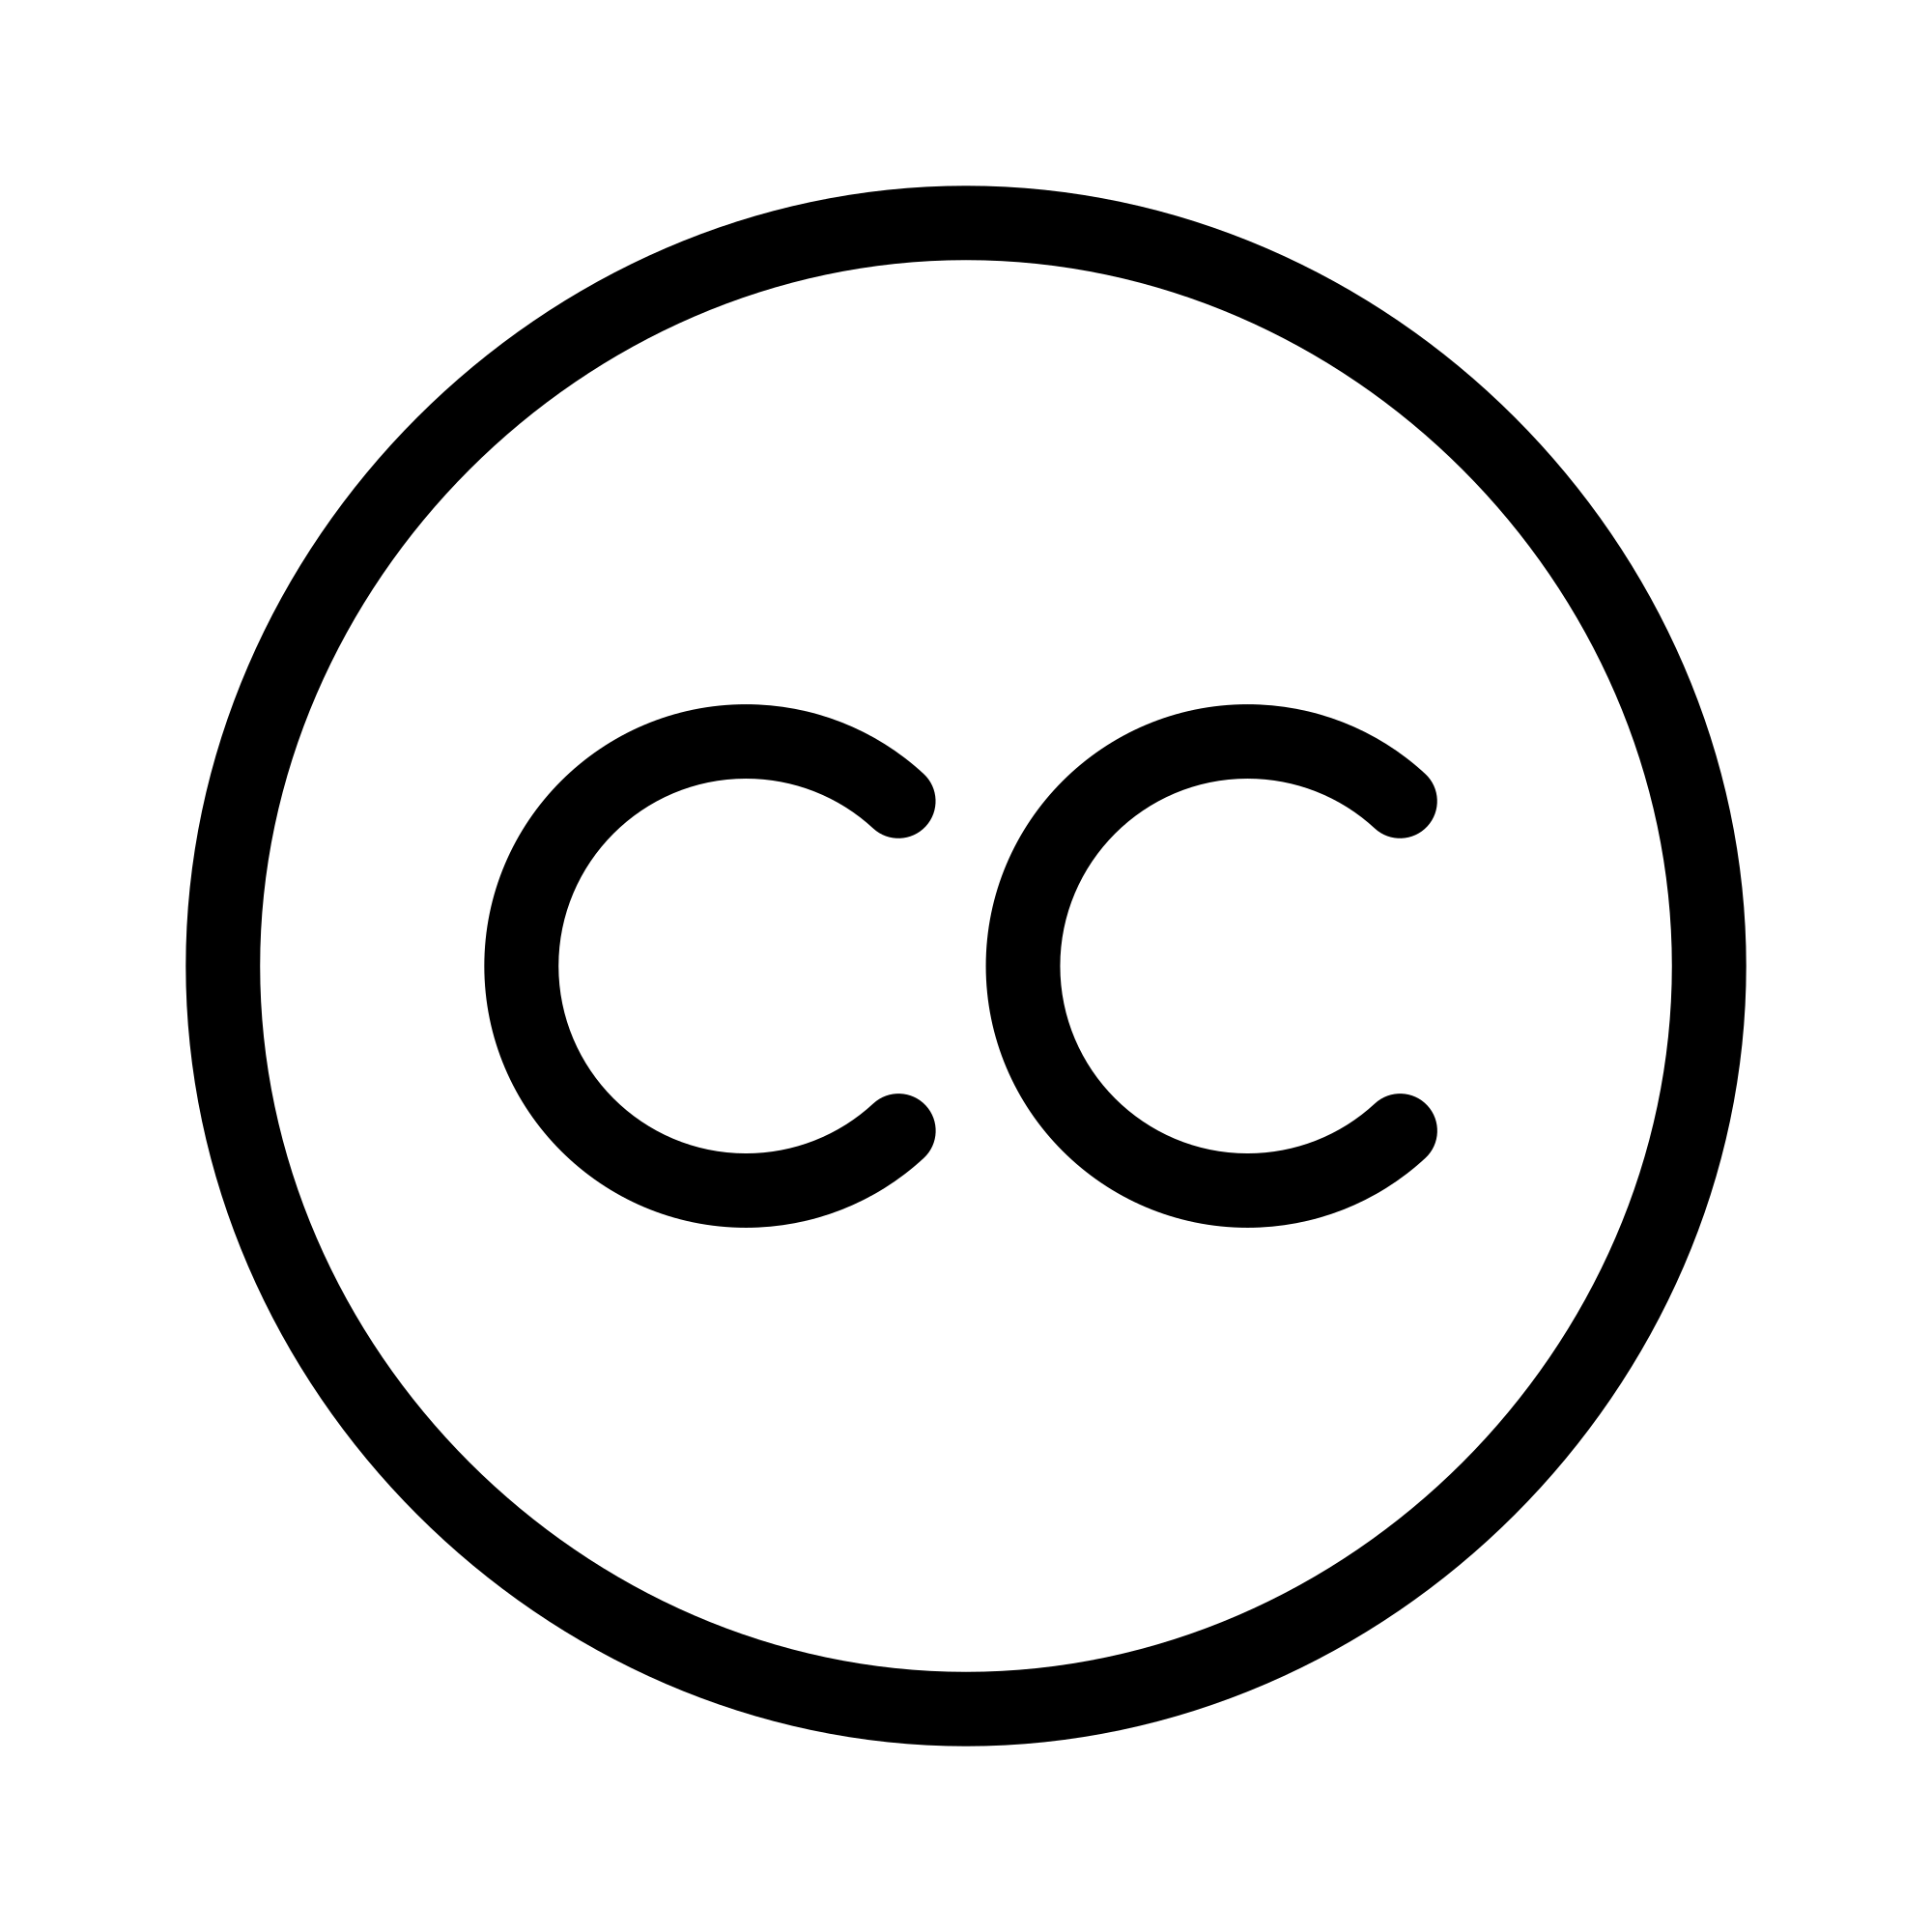 Creative Commons Logo - File:Noun Project Creative Commons logo 70967 cc.svg - Wikimedia Commons